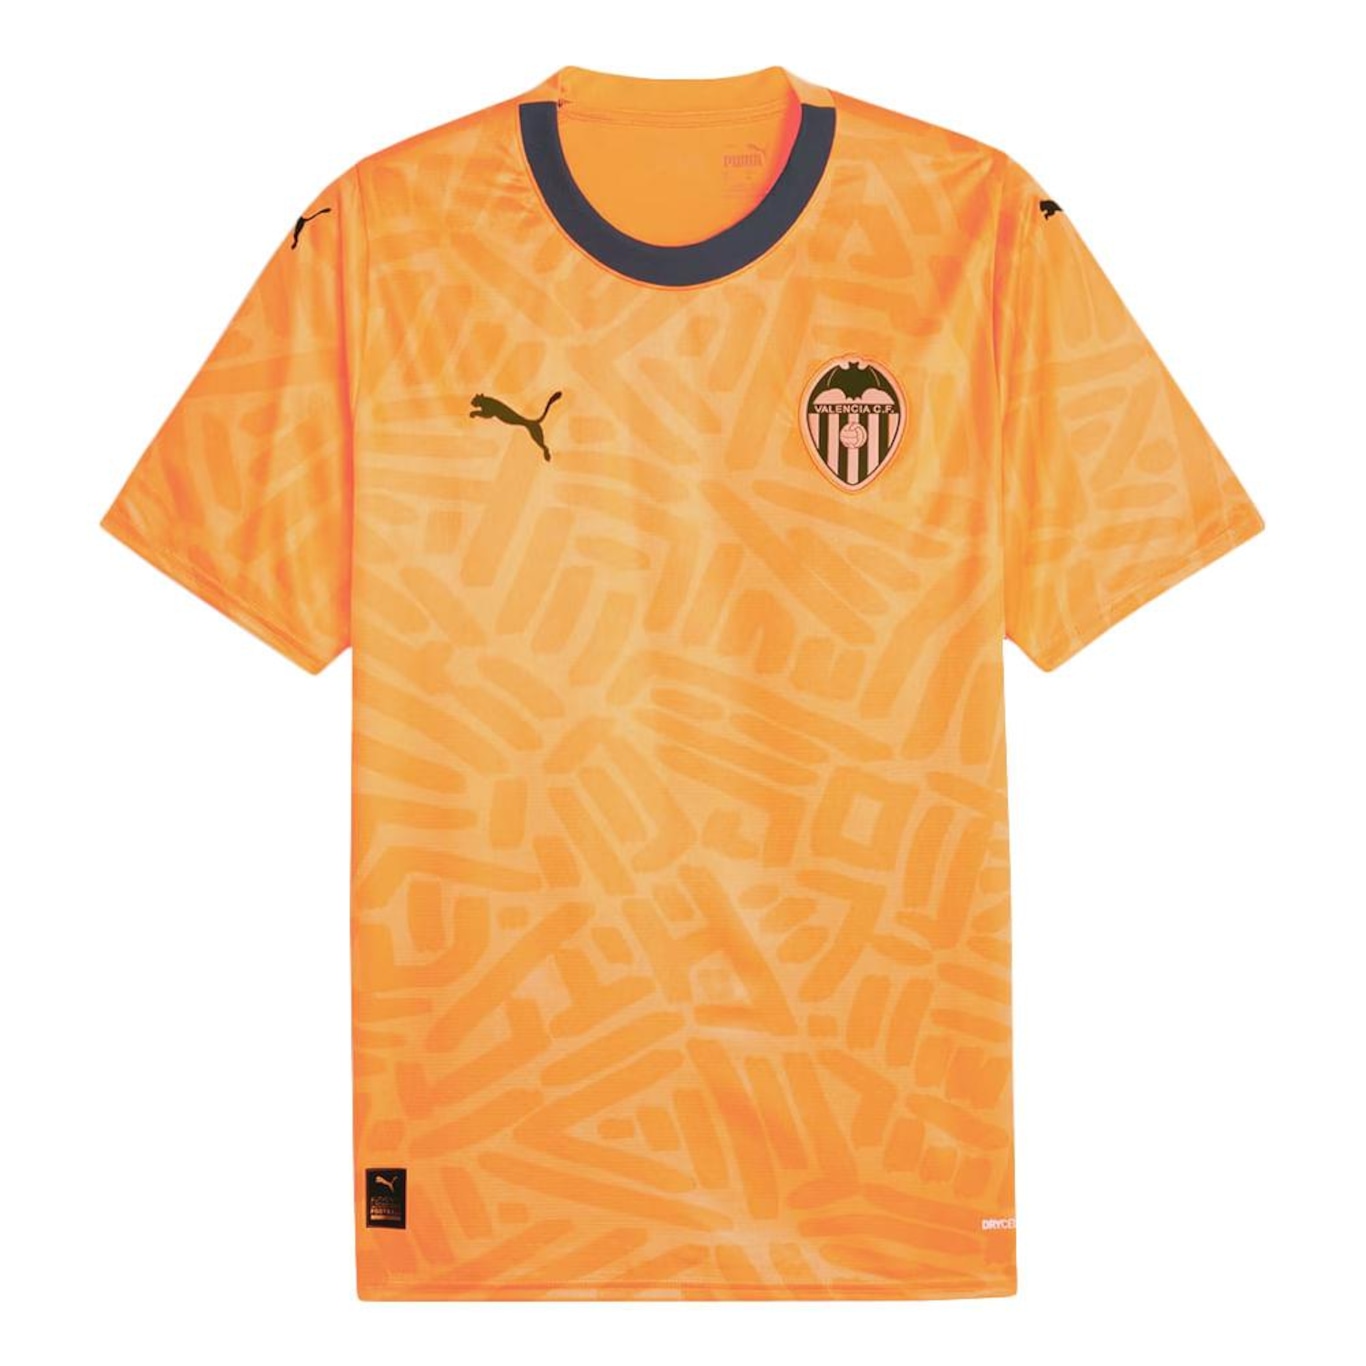 Camiseta Puma 3a Valencia CF 2020 2021